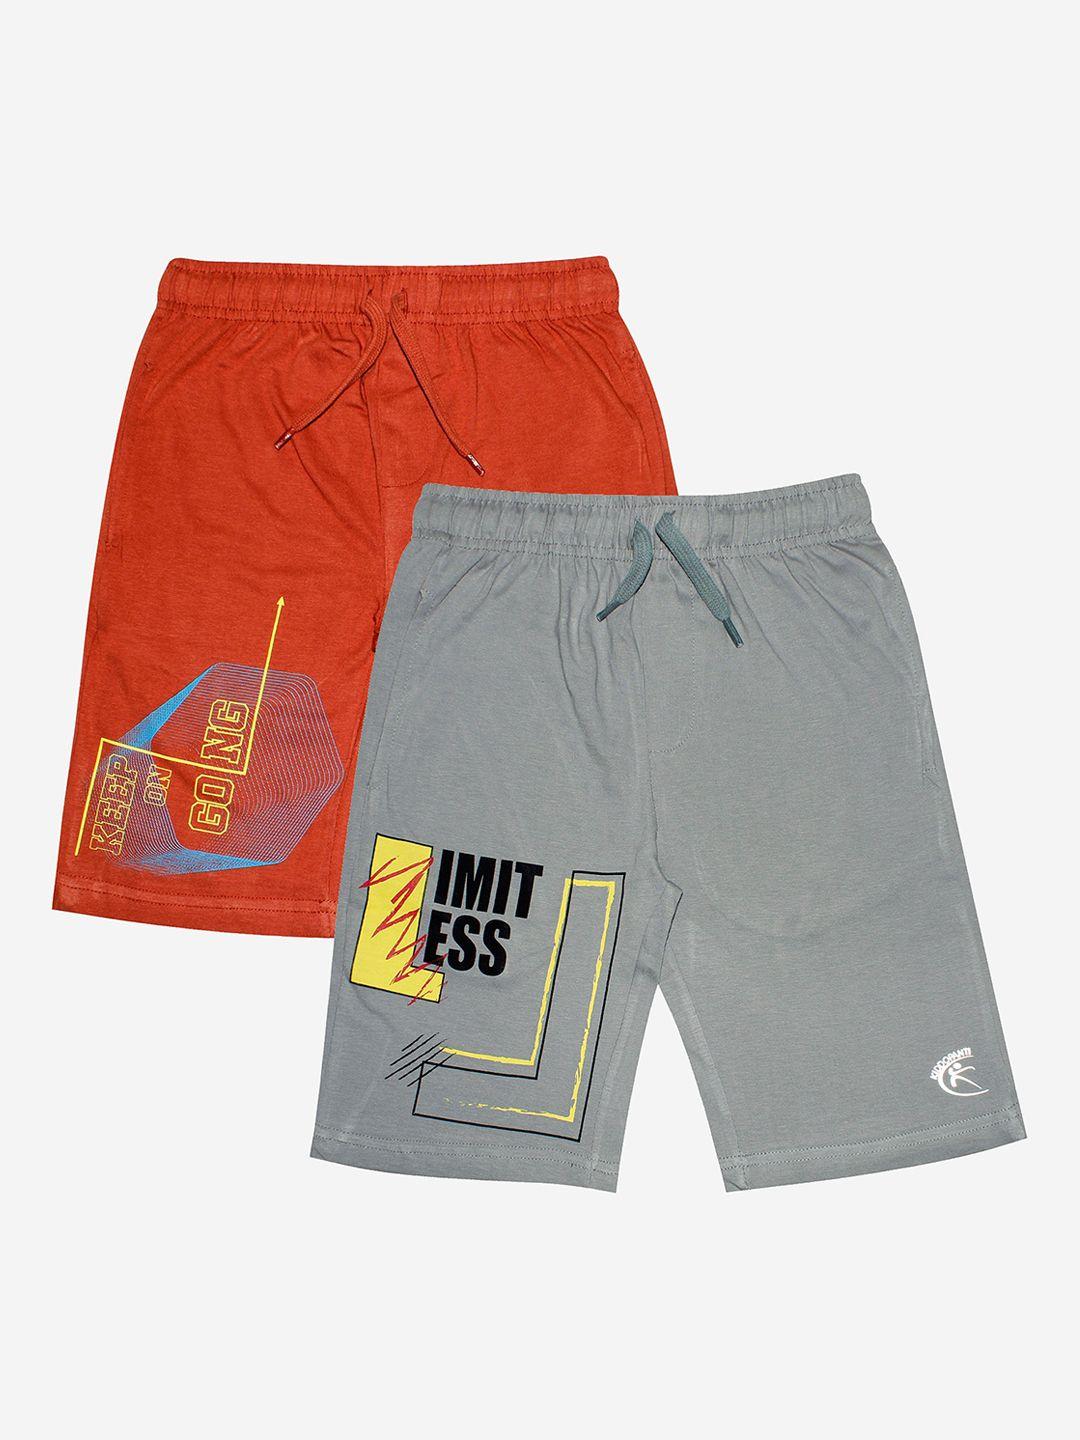 kiddopanti boys pack of 2 printed sports shorts